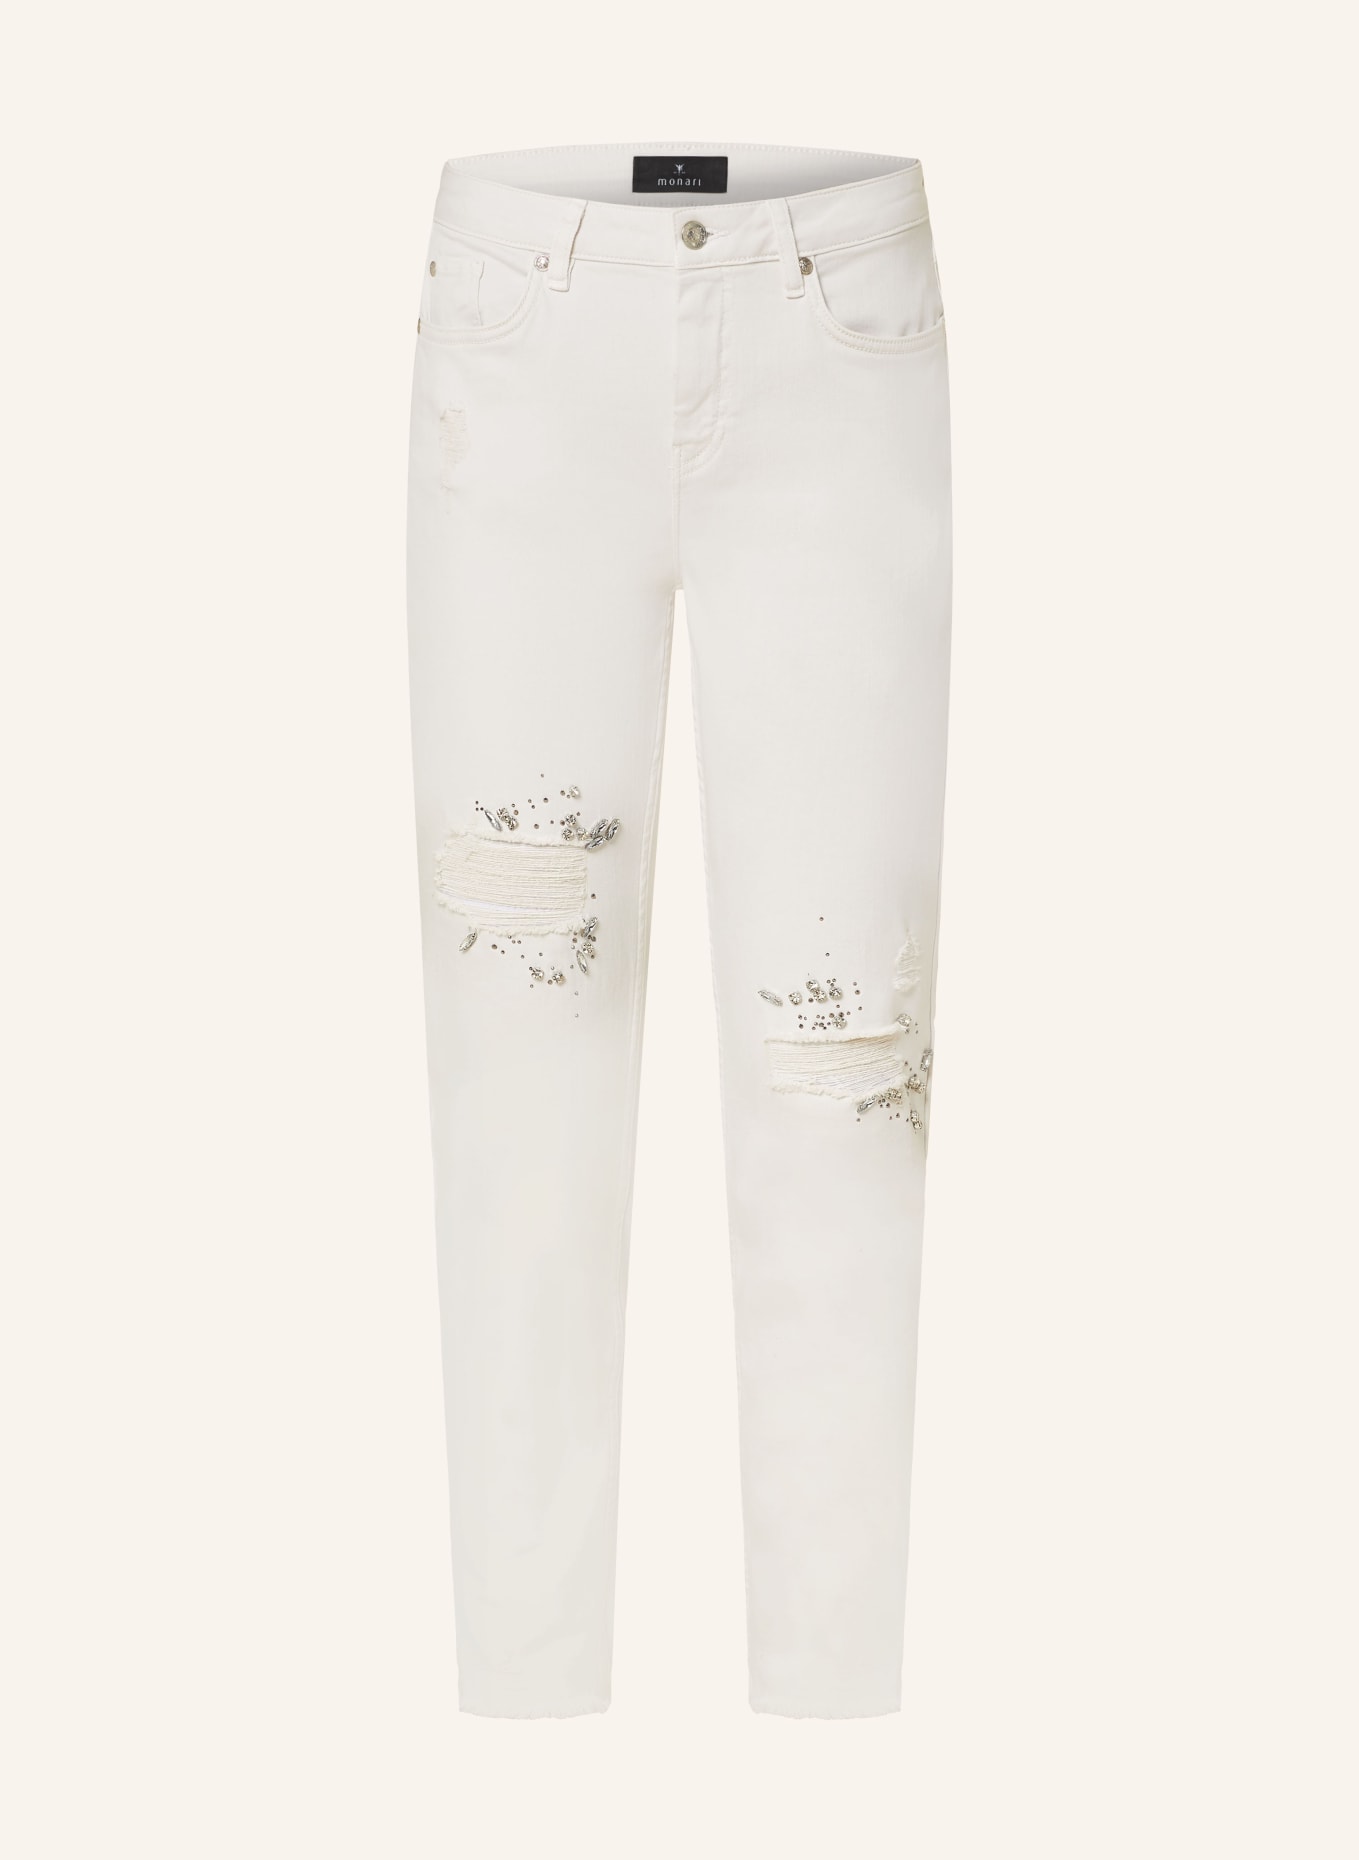 monari Skinny jeans with decorative gems, Color: LIGHT GRAY (Image 1)